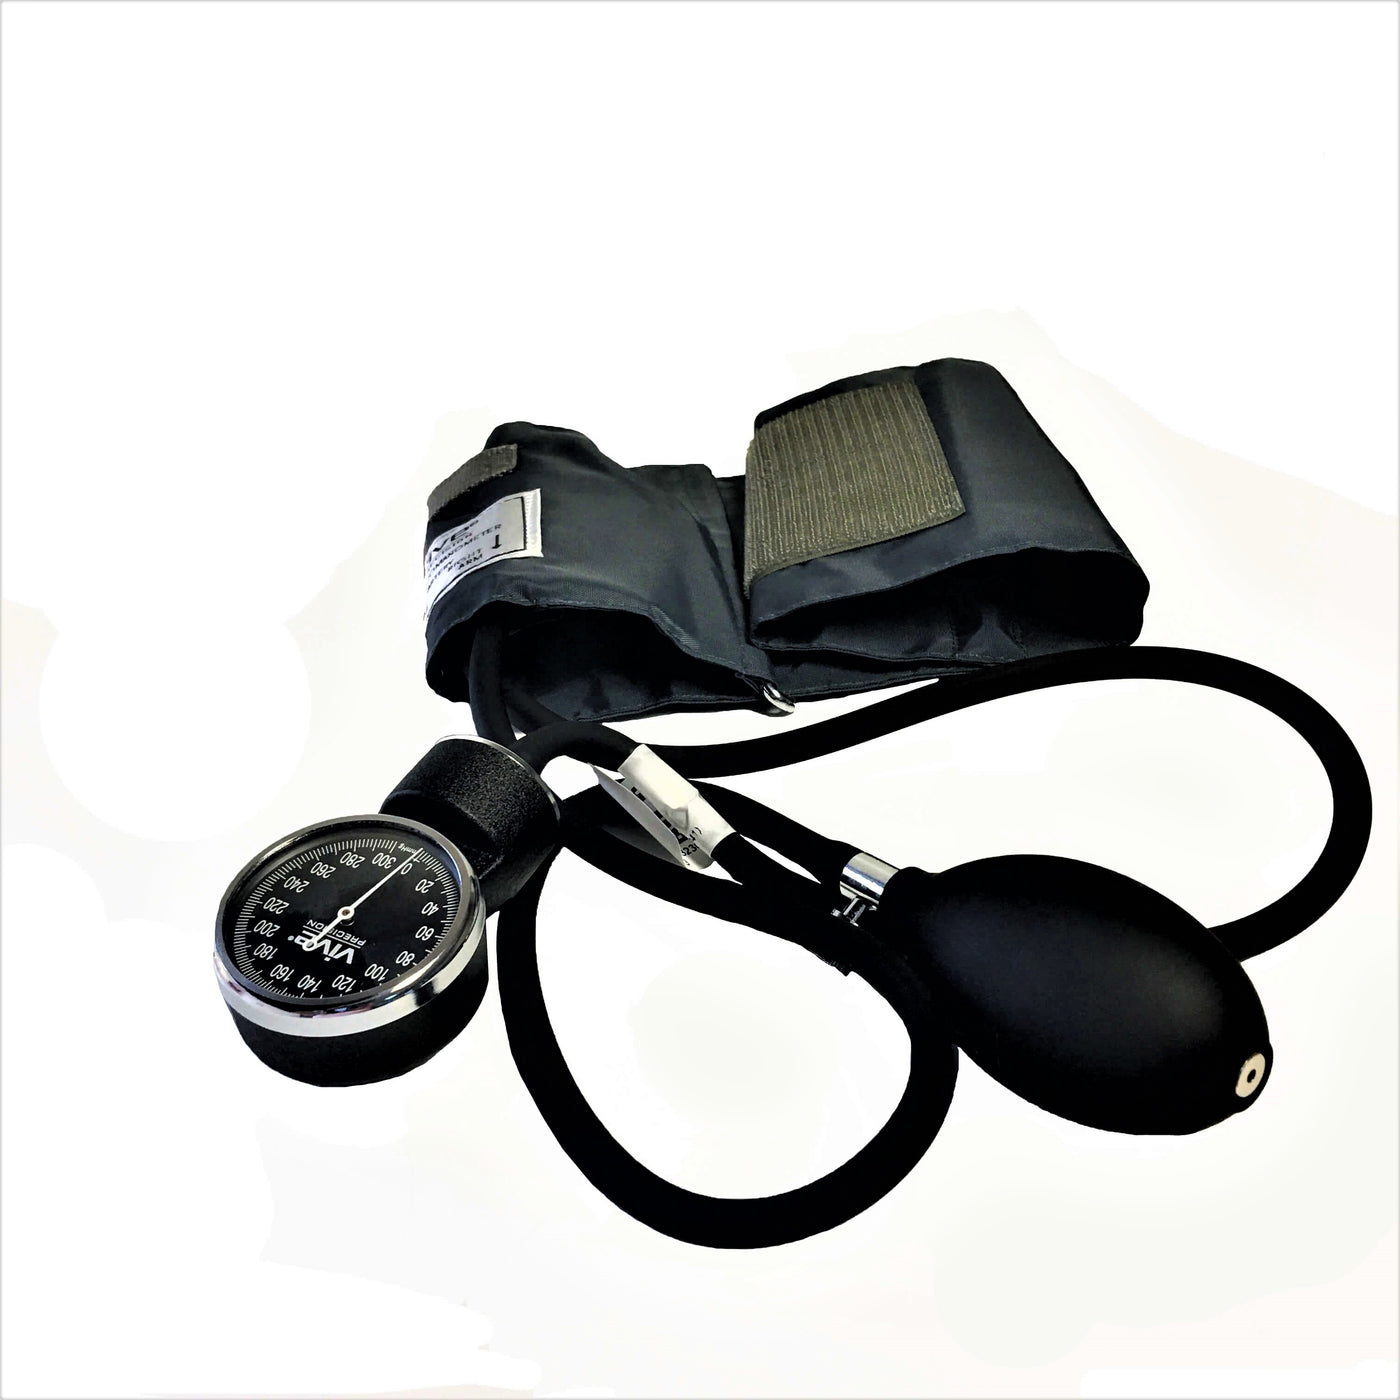 Vive Health Blood Pressure Monitor Replacement Cuff Gray Medium